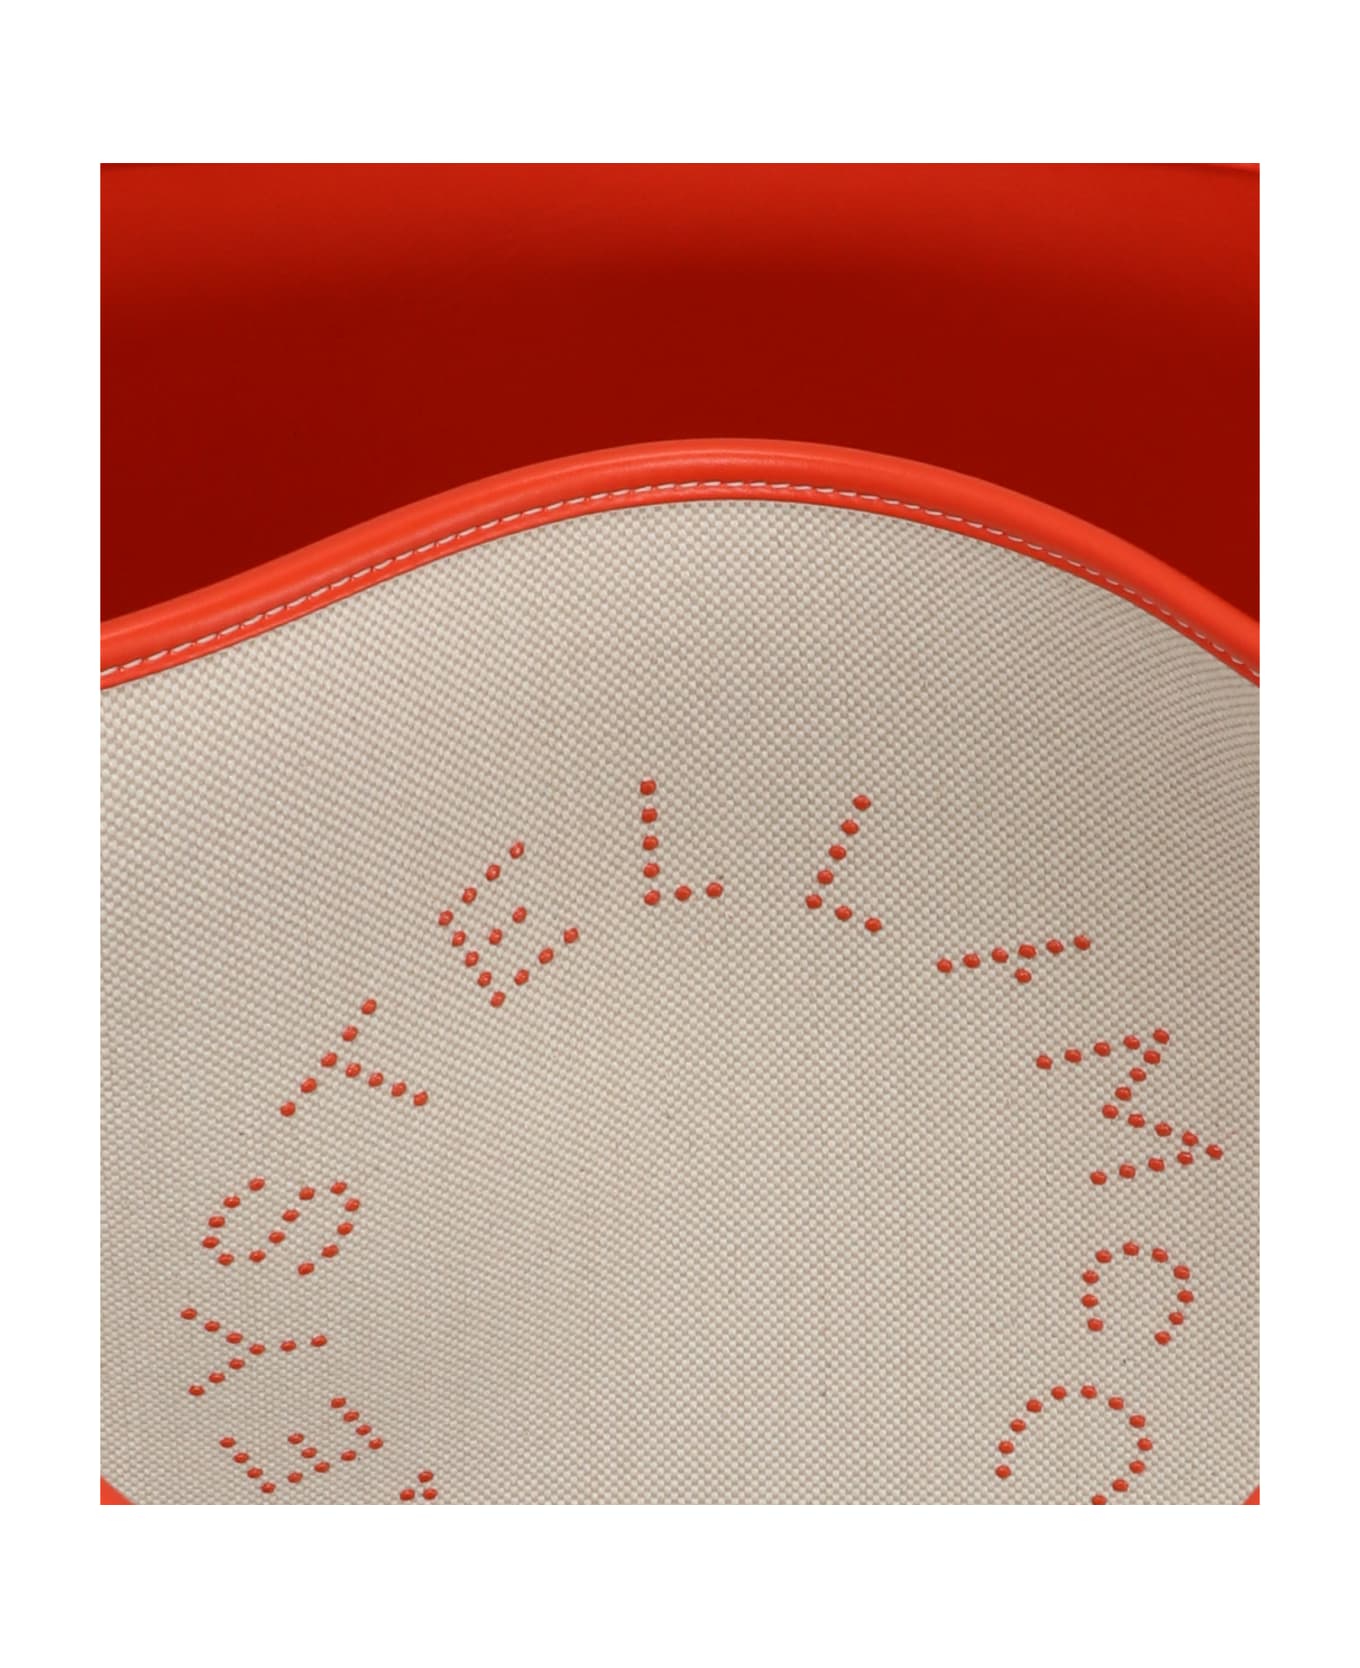 Stella McCartney Logo Detail Tote Bag - Beige